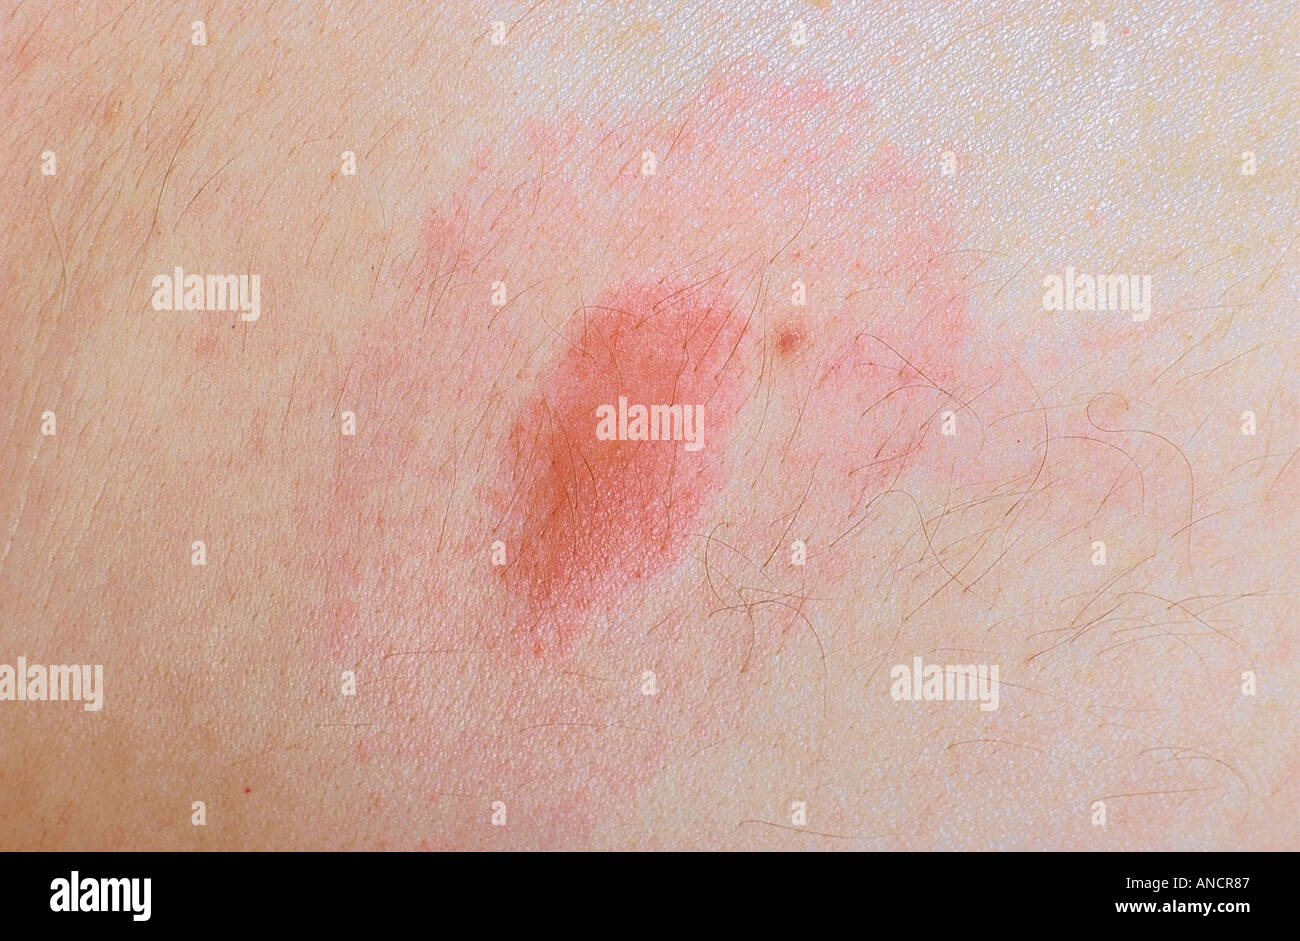 Lyme Disease Picture Image on MedicineNet.com